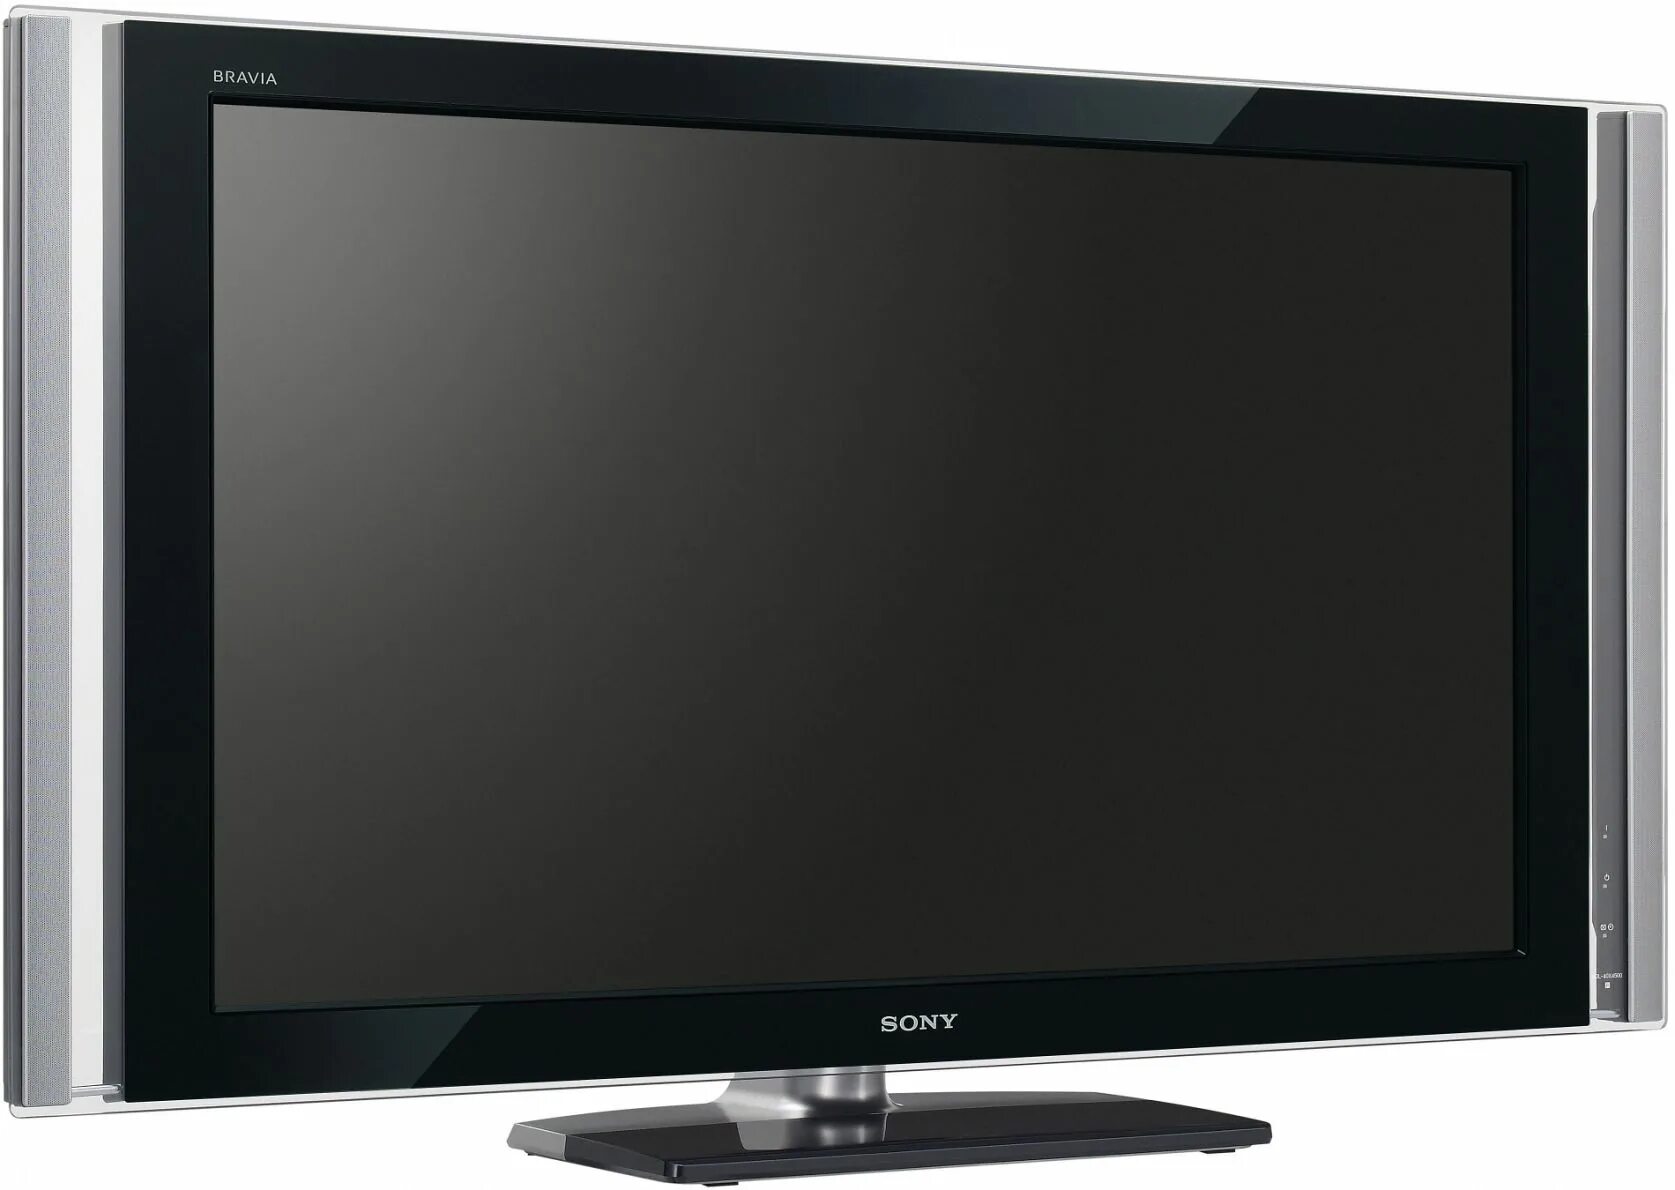 Недорогие телевизоры вологда. Телевизор Sony Bravia KLV-26nx400. KDL 40x4500. Sony 26nx400. Телевизор Sony KLV 26 NX 400.